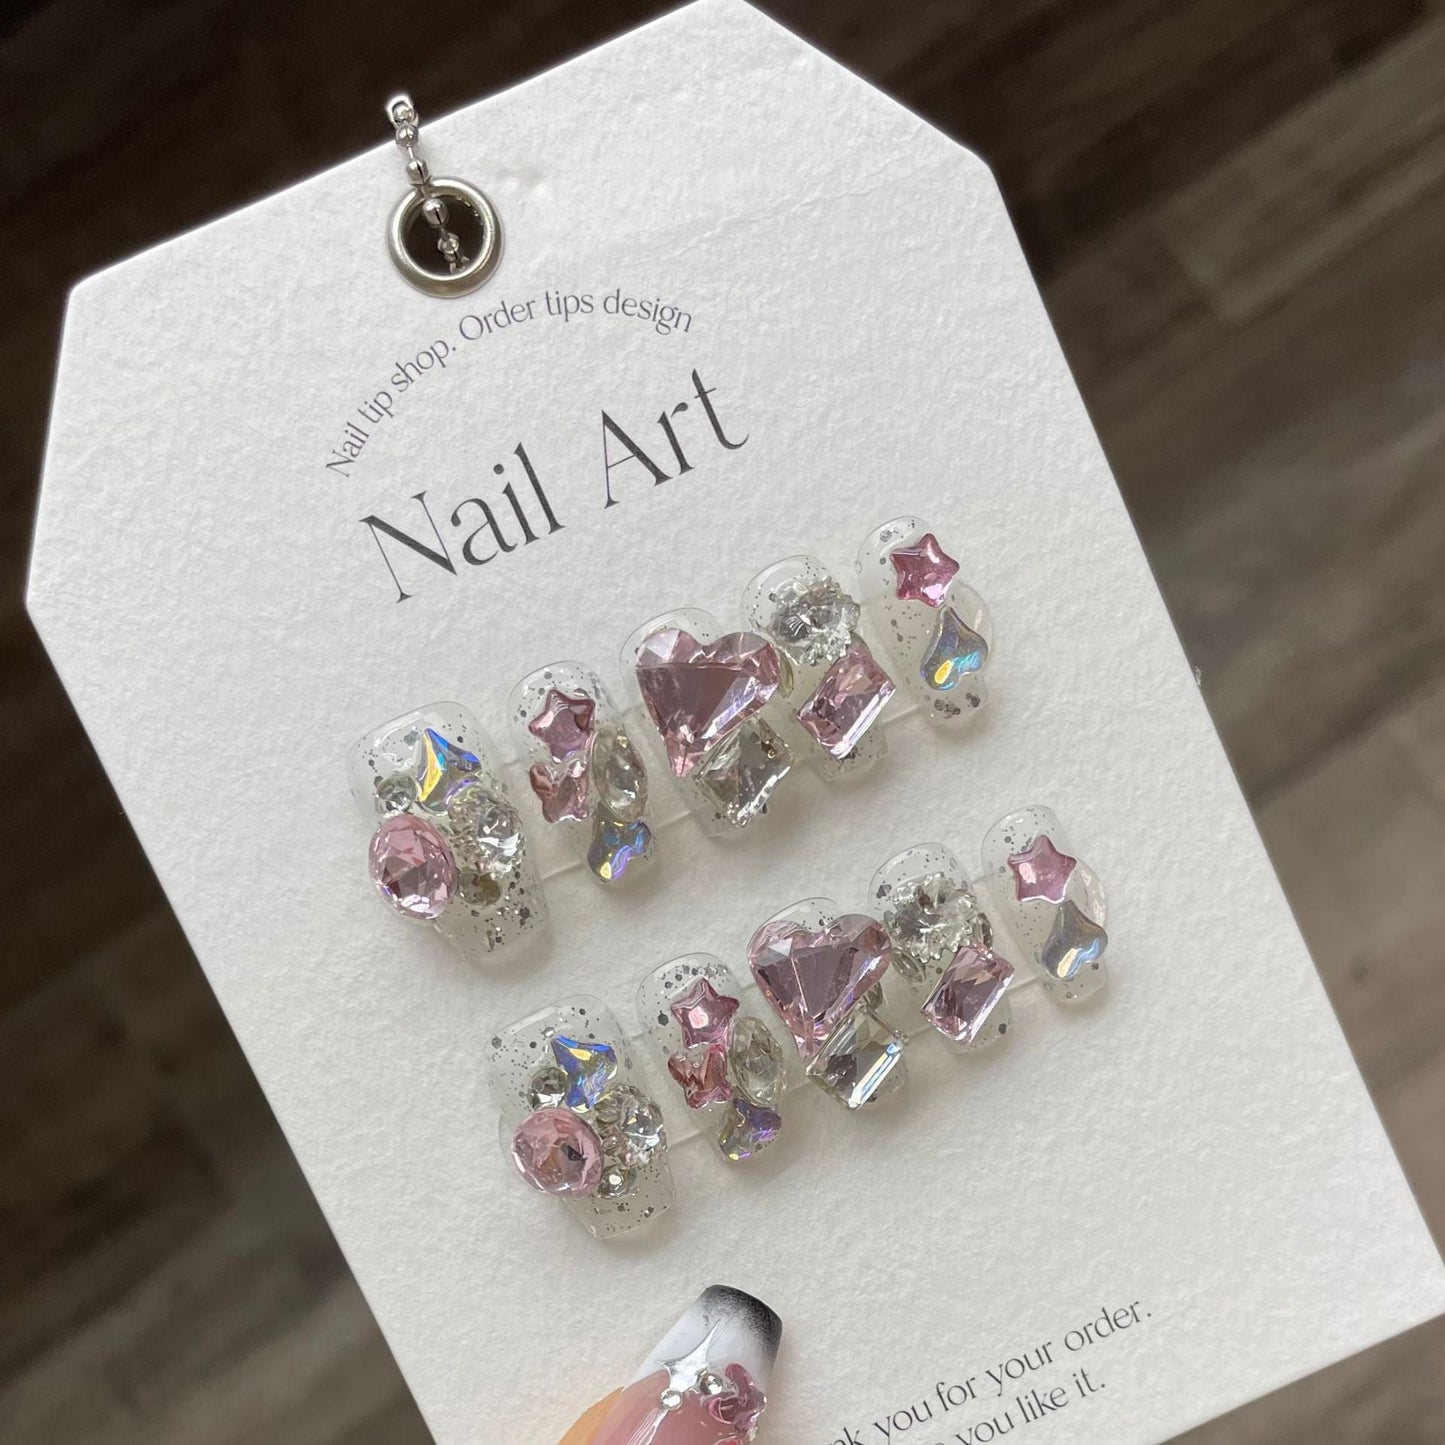 897 Rhinestone style press on nails 100% handmade false nails white pink